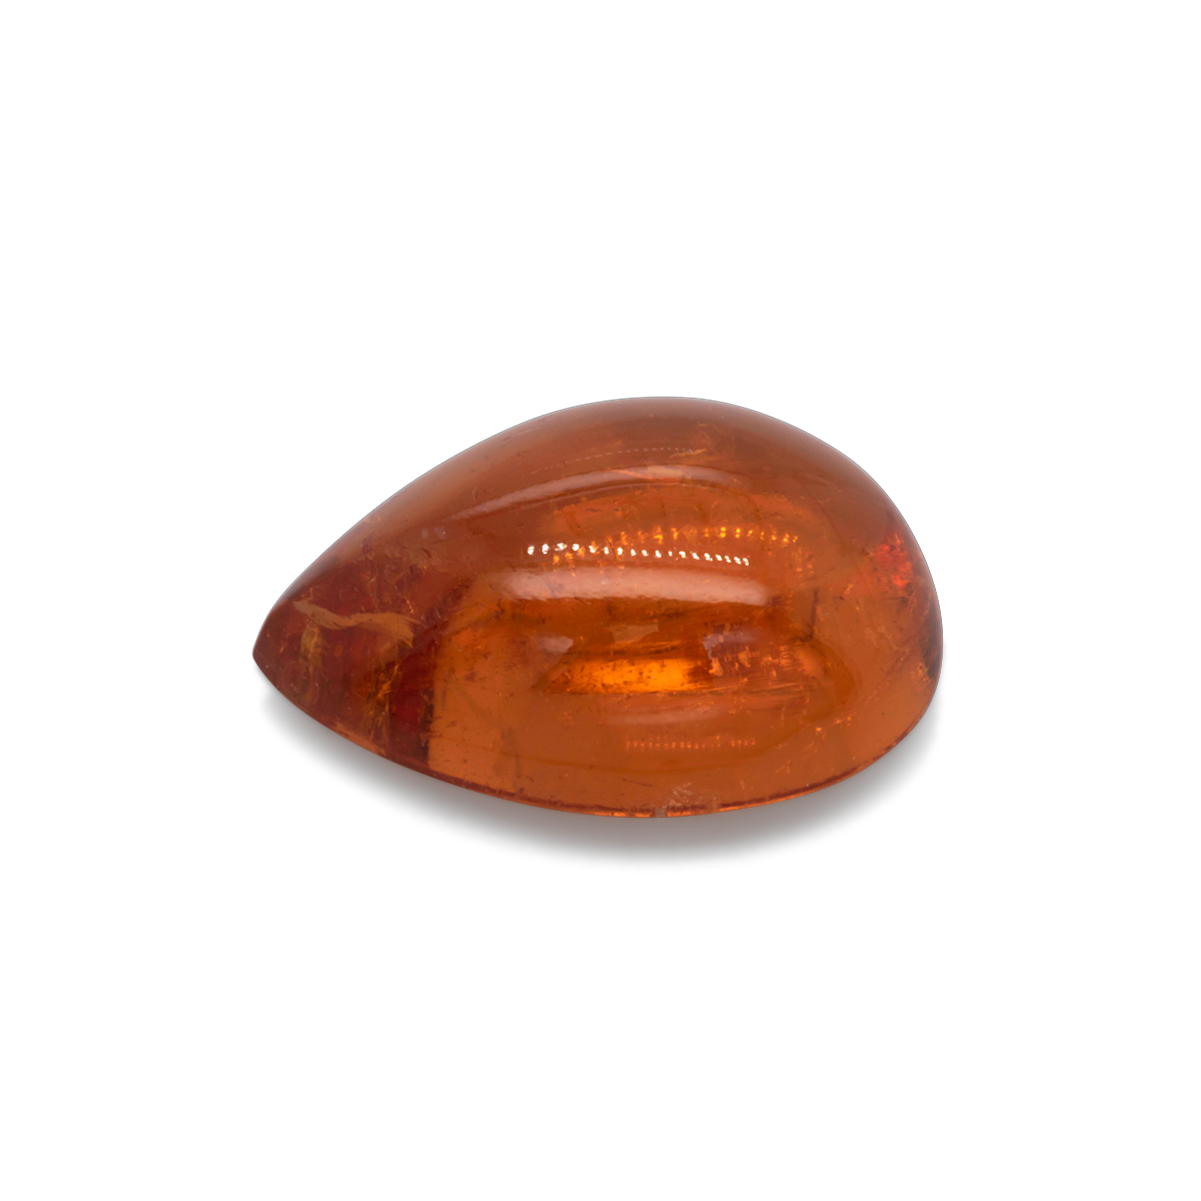 Mandarin Granat - orange, birnform, 10,9x8 mm, 3,83 cts, Nr. MG99045